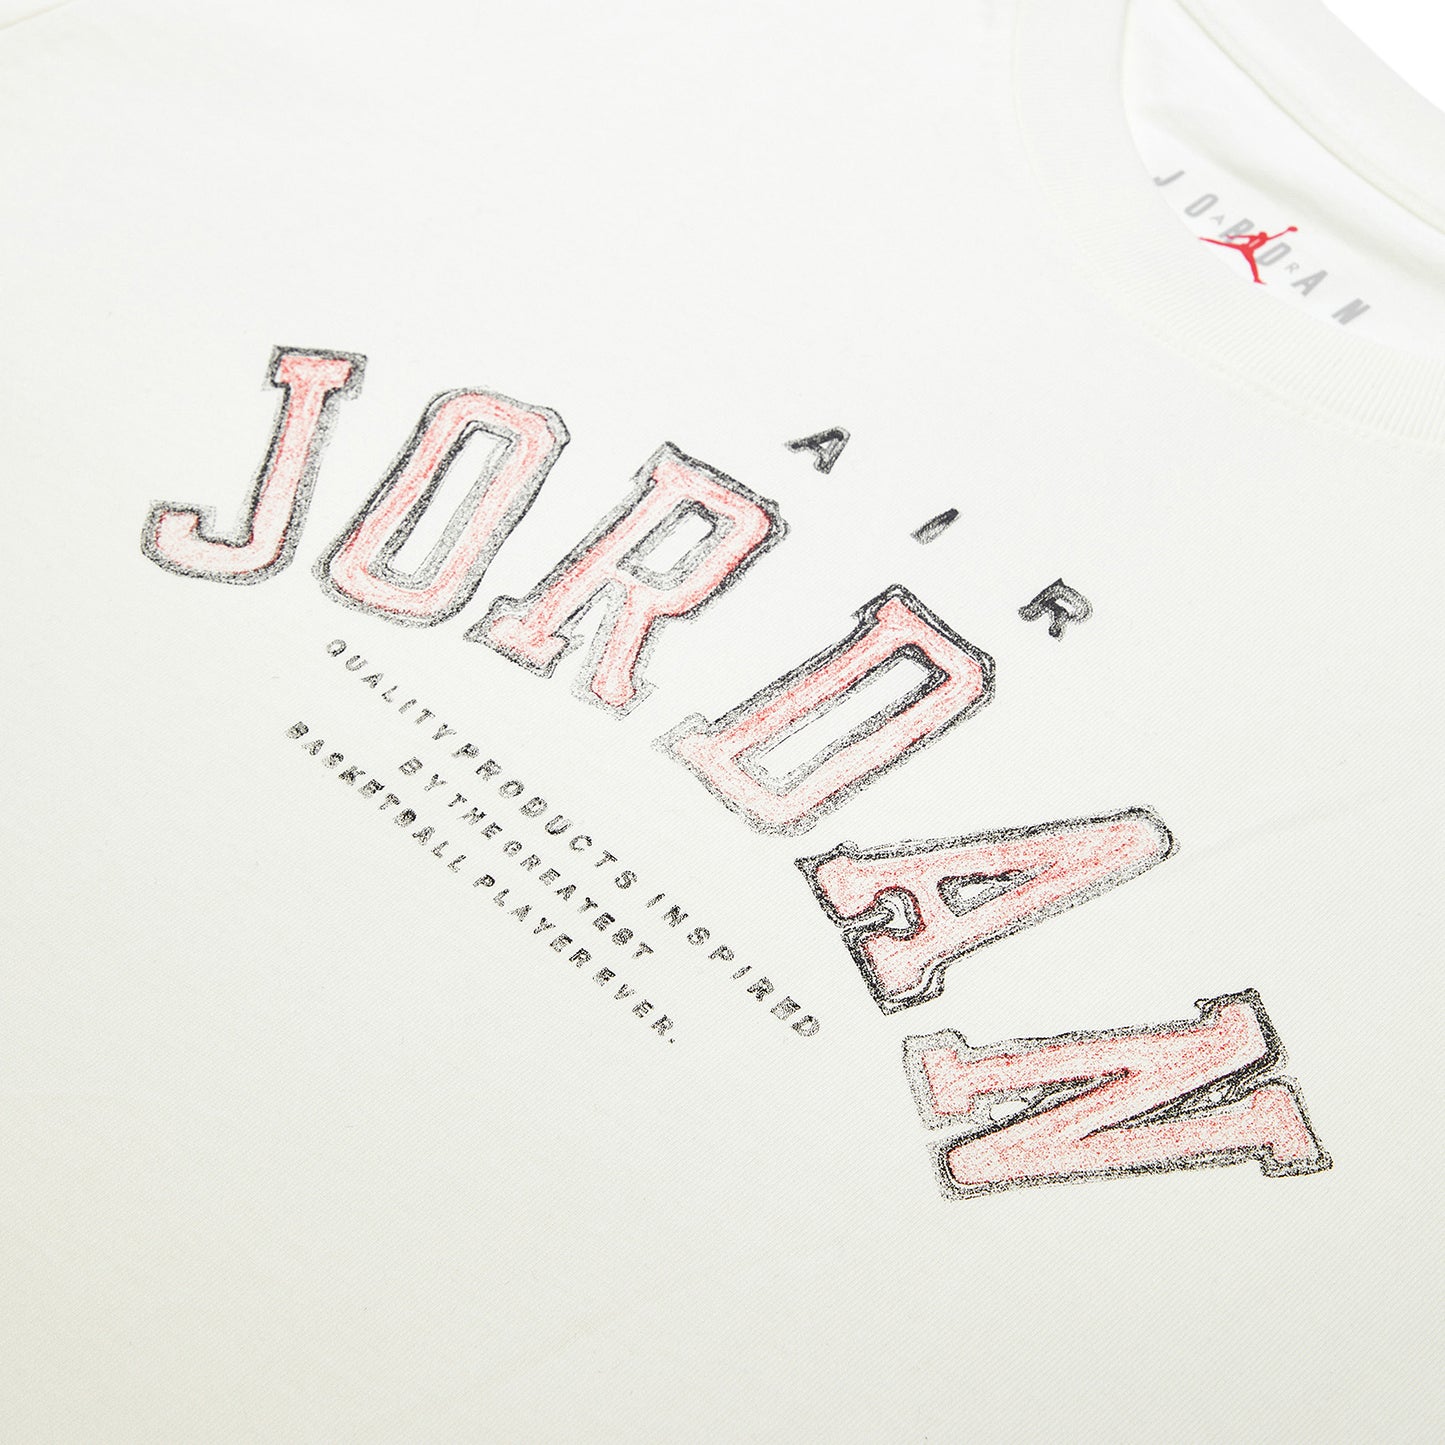 Jordan Flight Essentials T-shirt (Sail/Lobster)